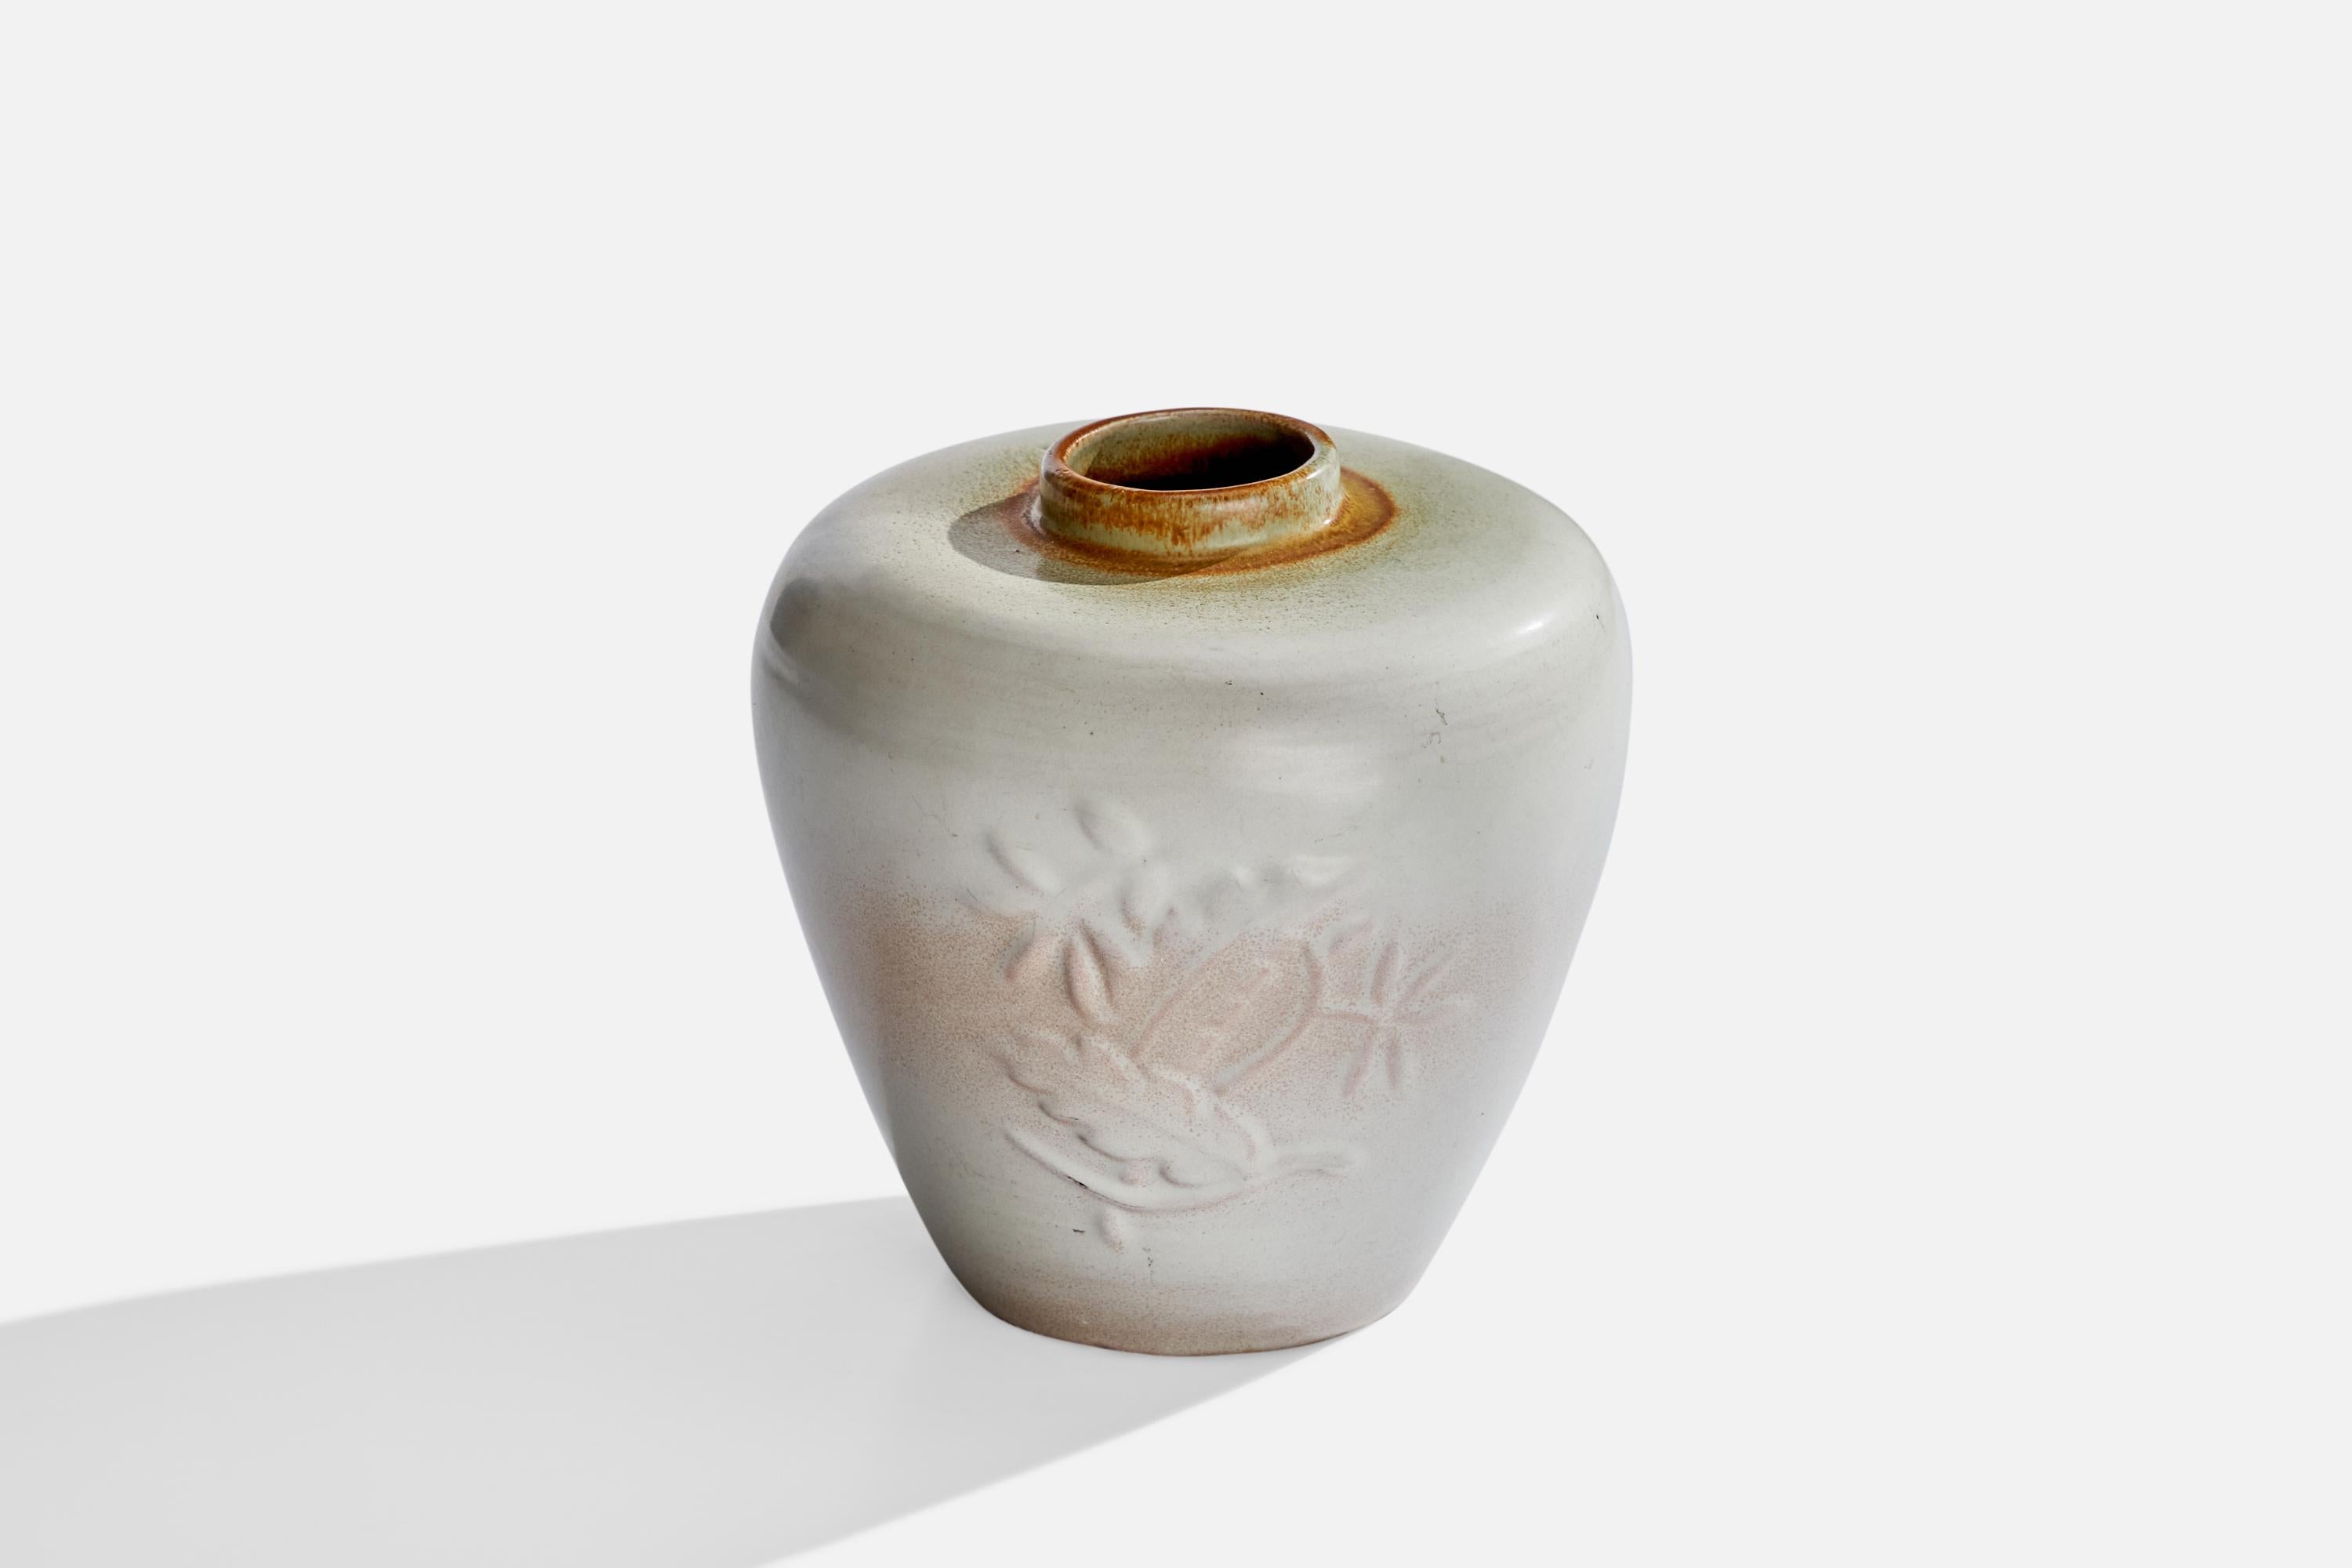 A light-grey and brown-glazed ceramic vase designed and produced in Sweden, 1930s.